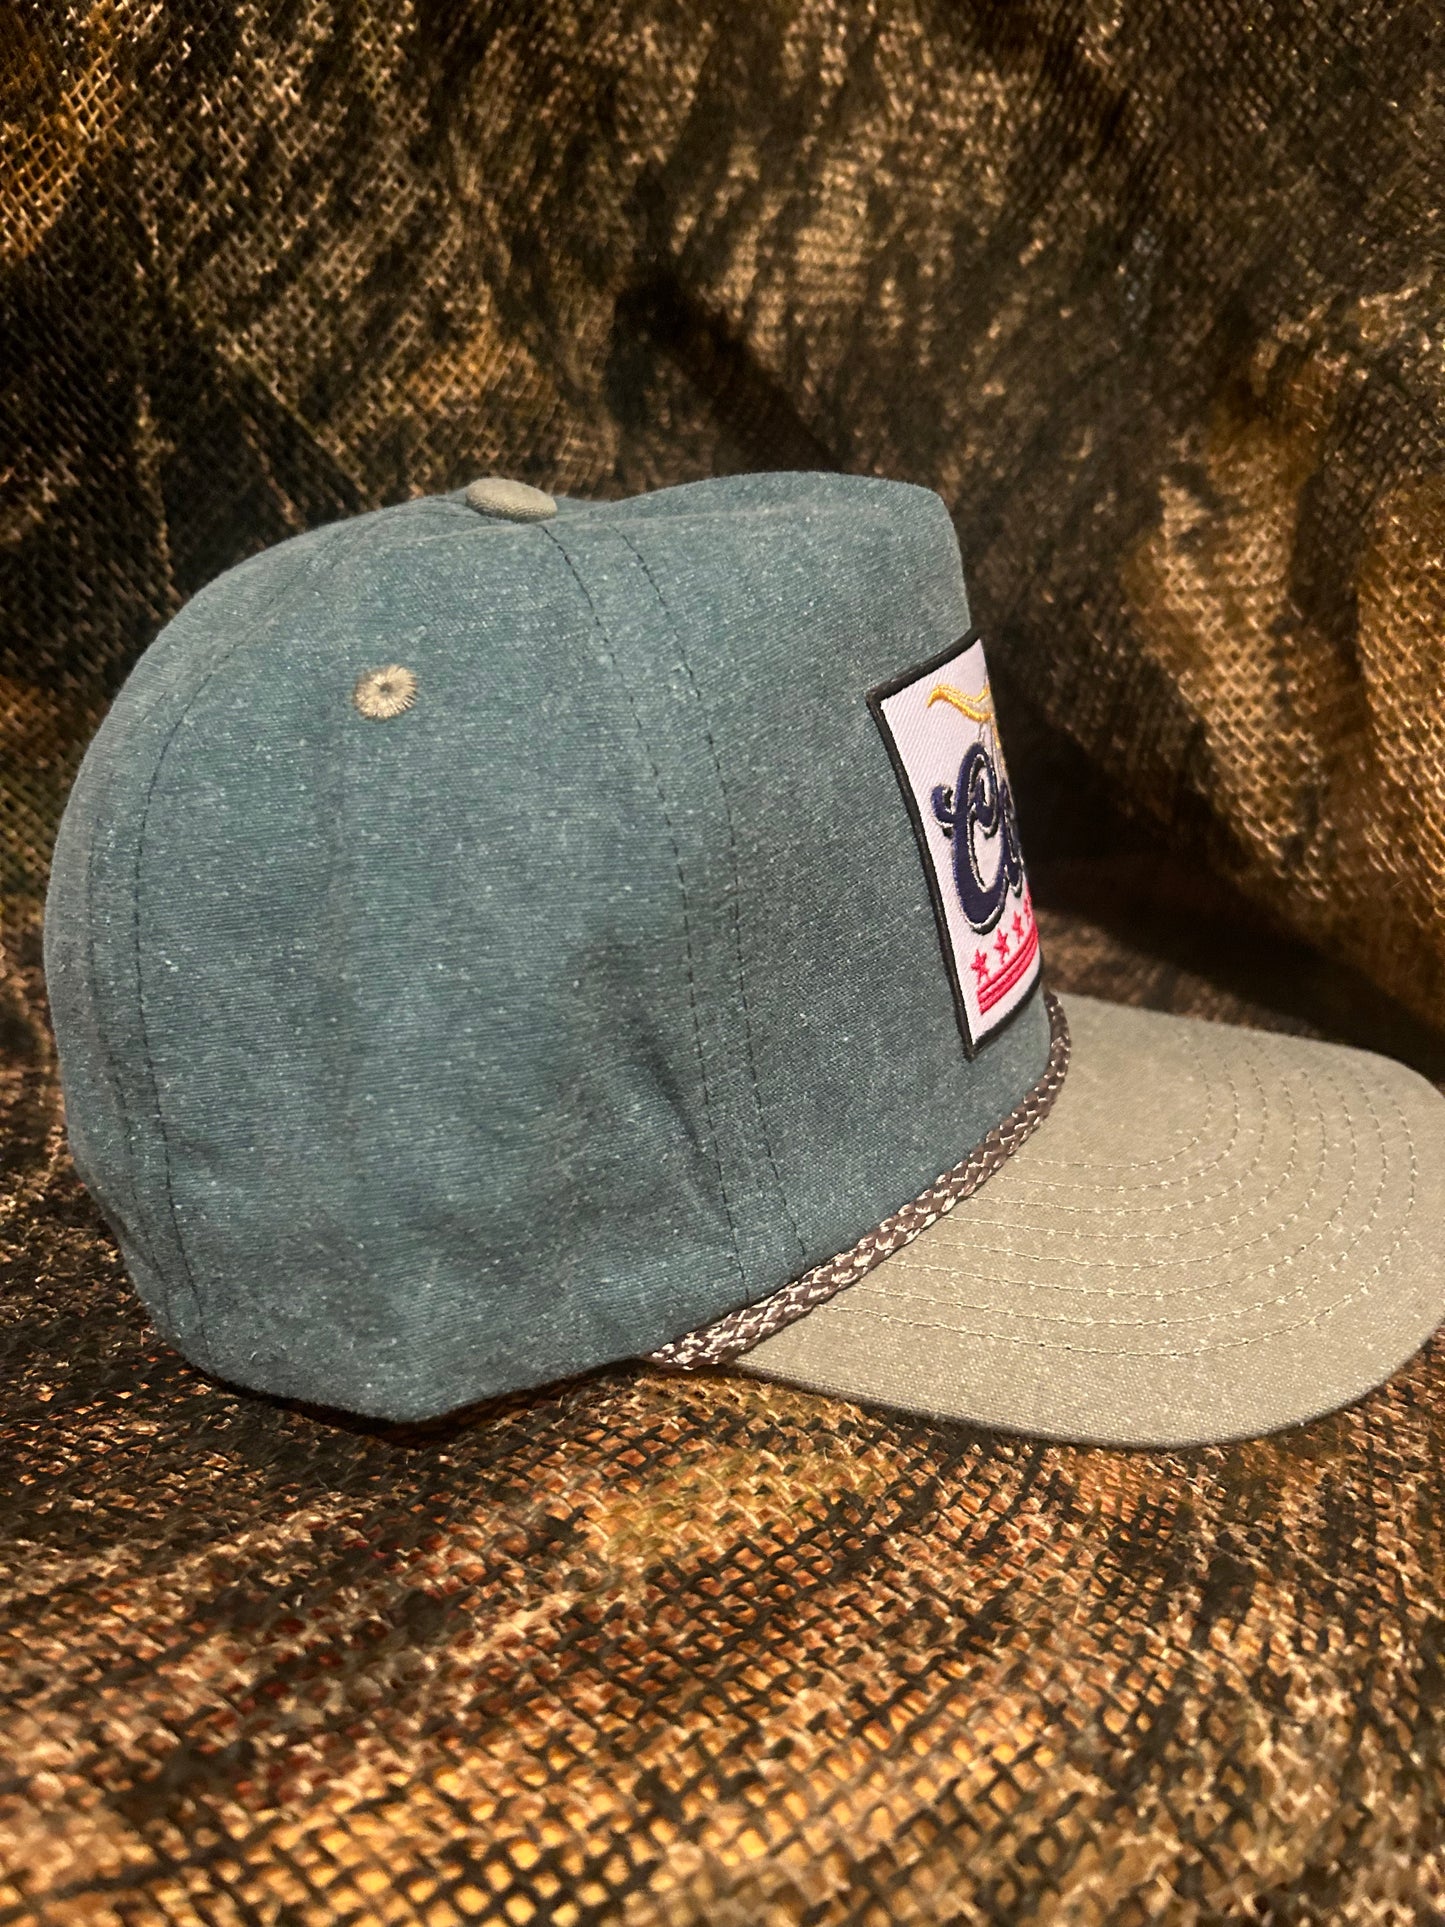 Coors & Cattle Moss green SnapBack hat